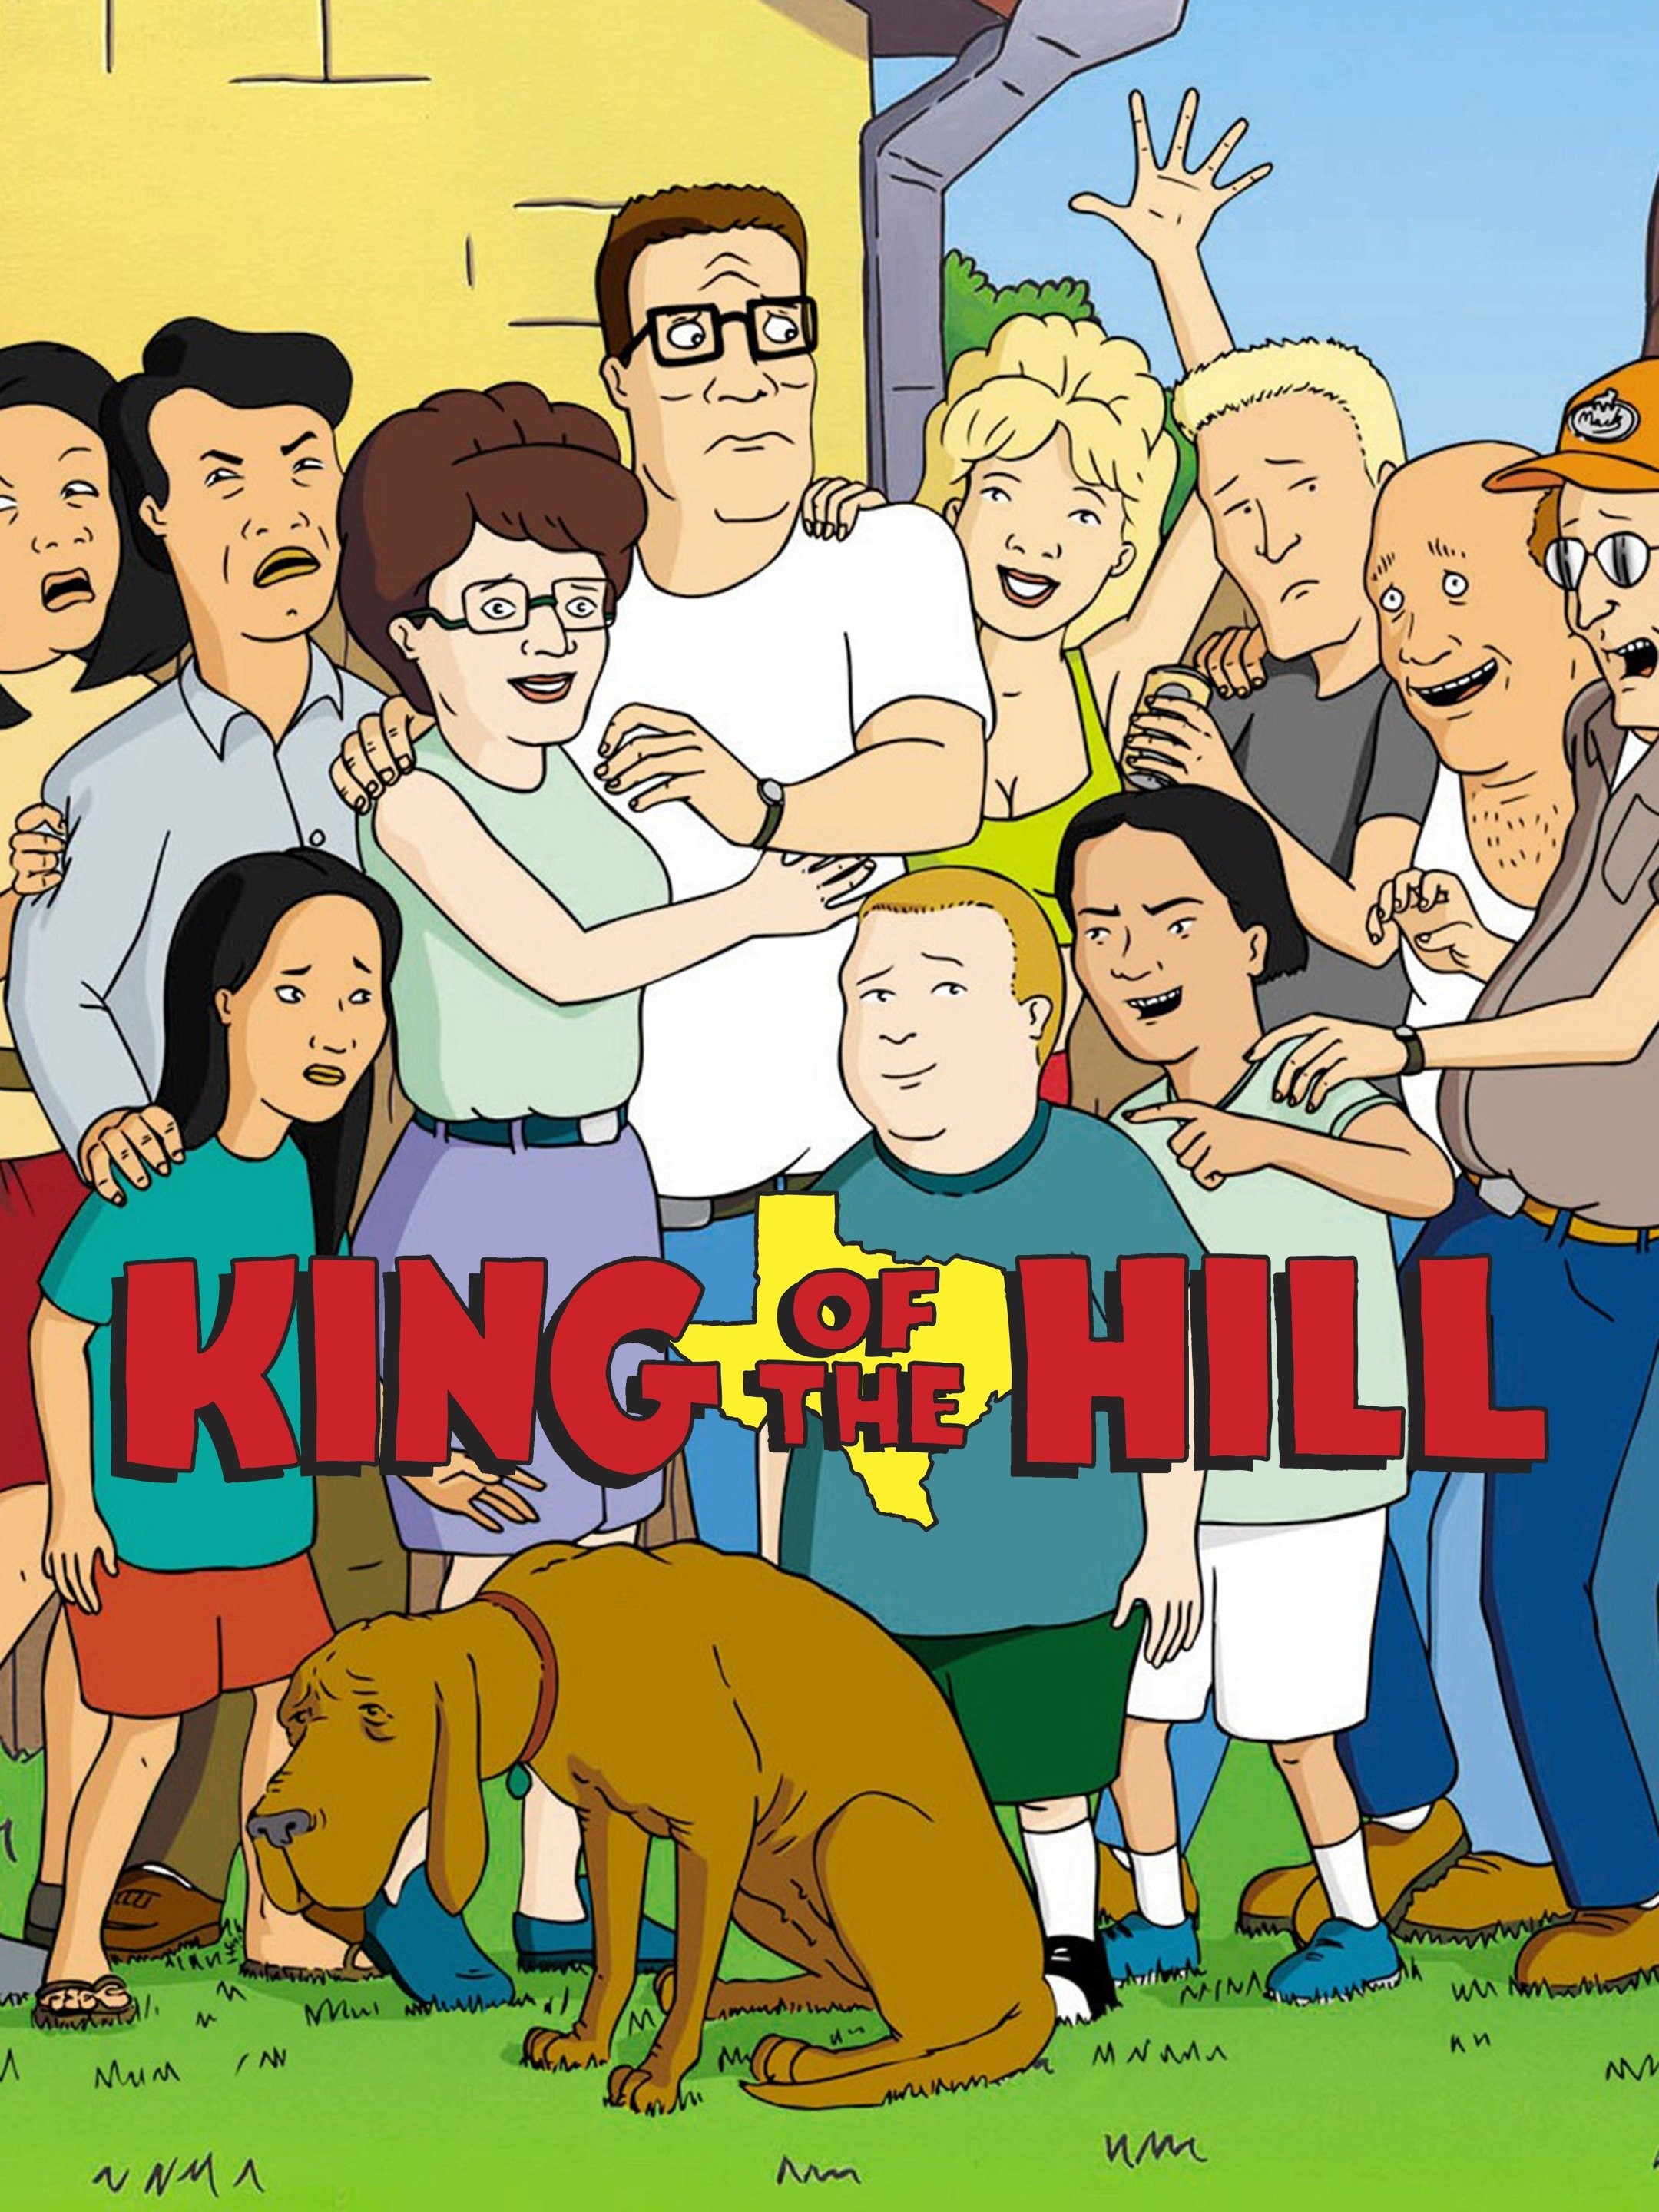 King of the Hill (season 3) - Wikipedia